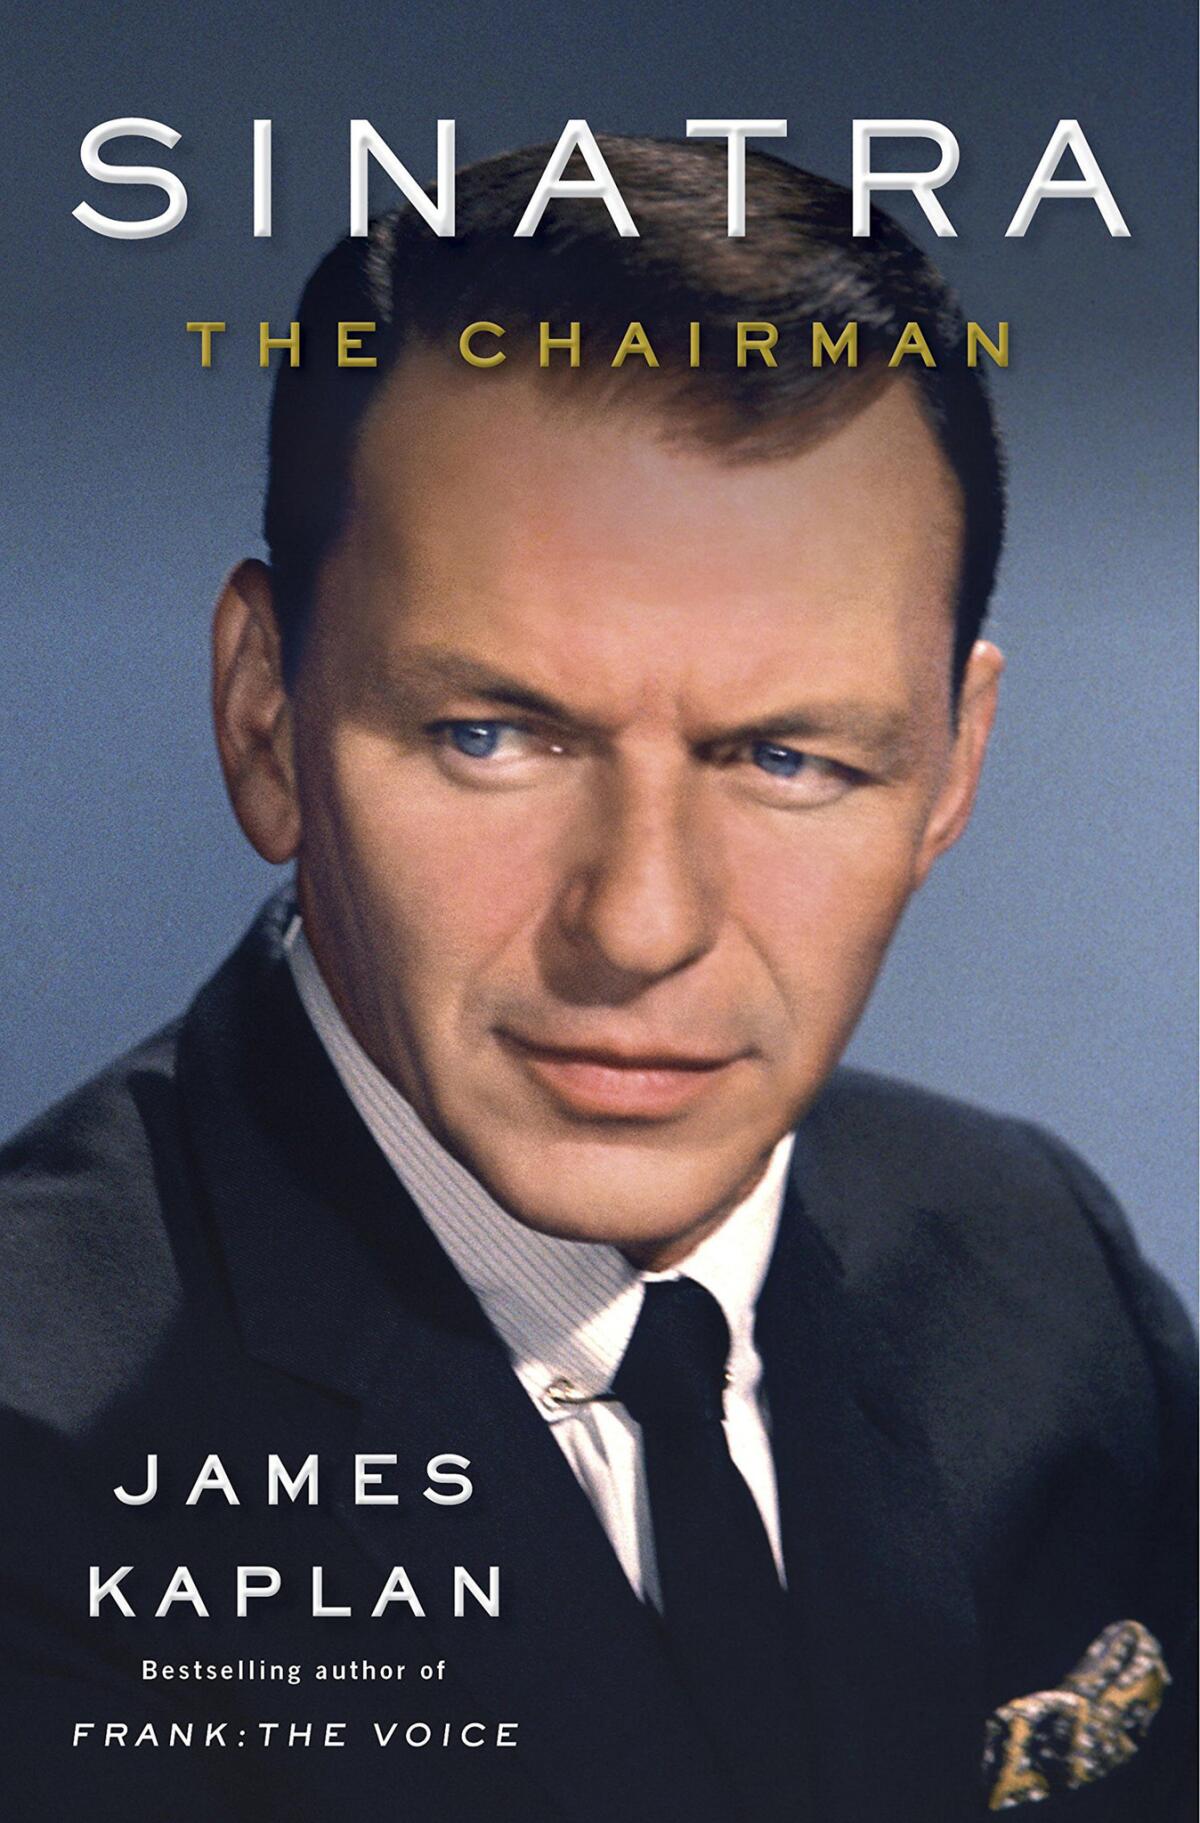 "Sinatra: The Chairman" by James Kaplan